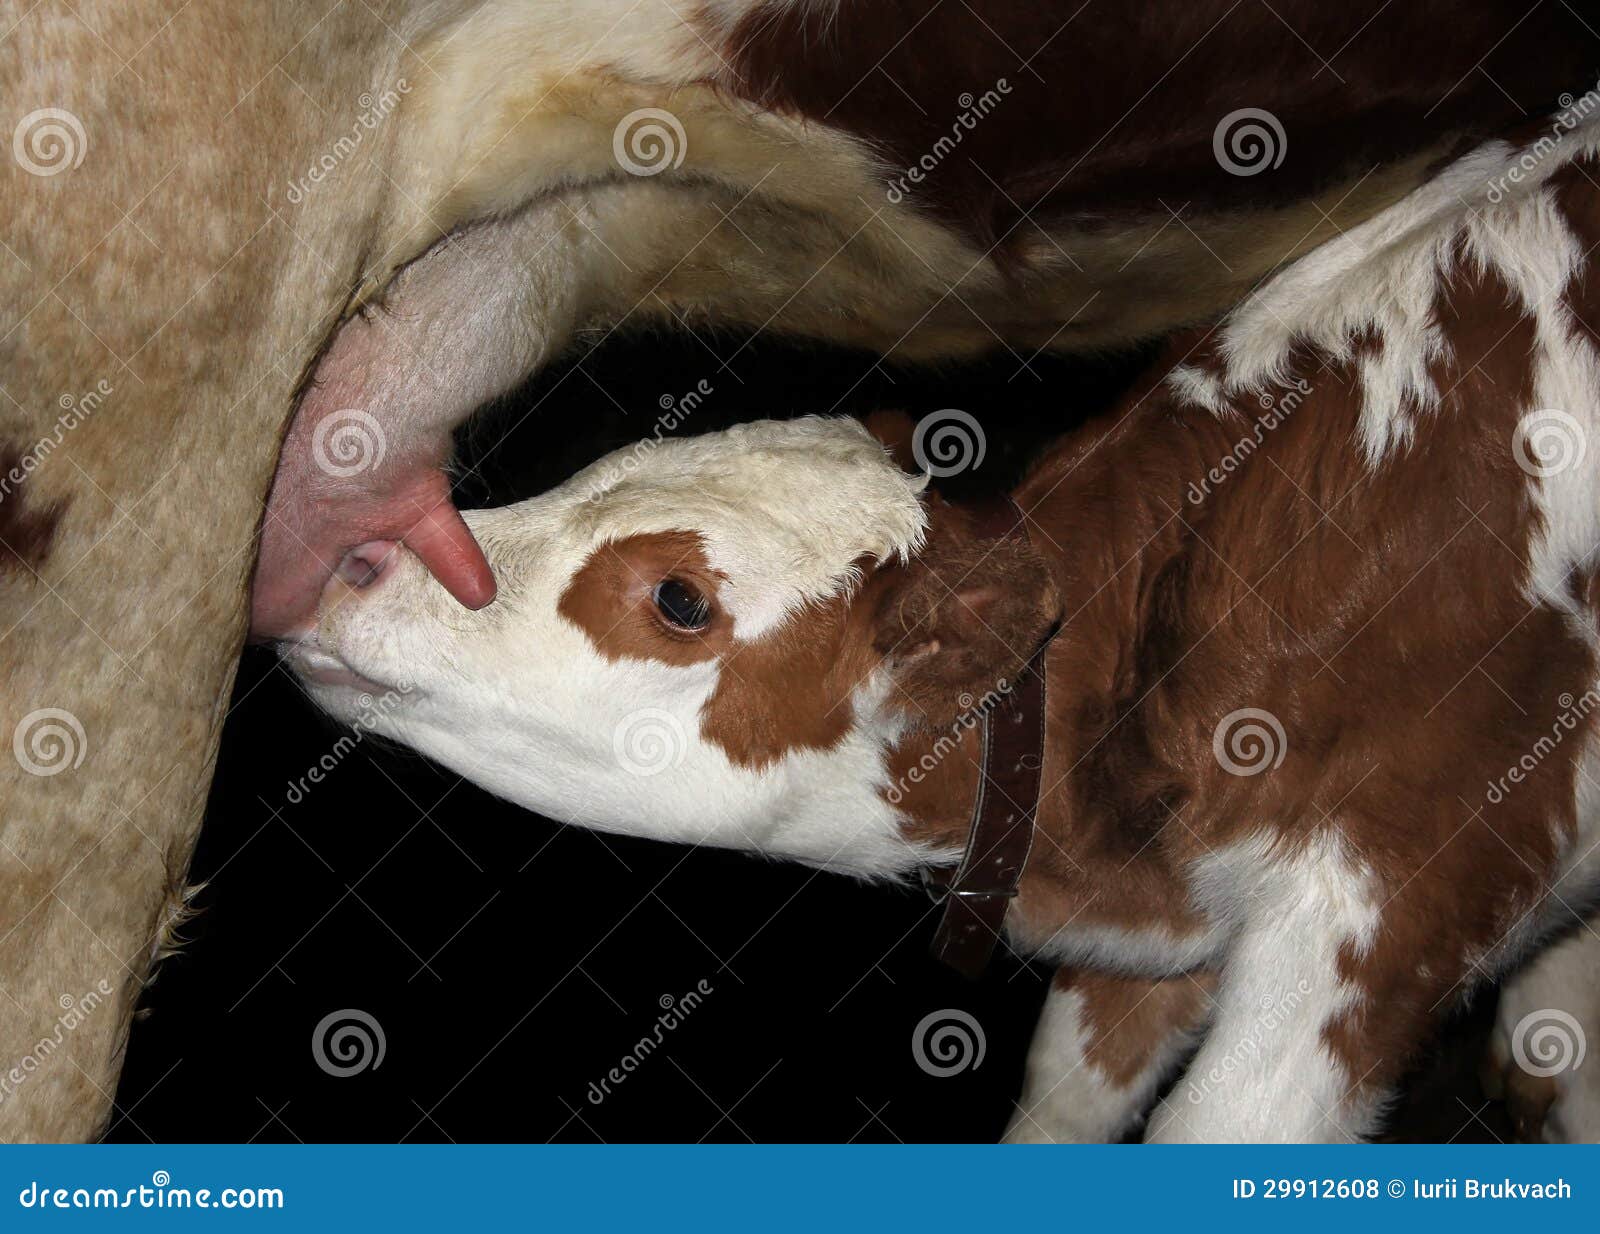 Cow Suck Extreme Penis - XXX PHOTO